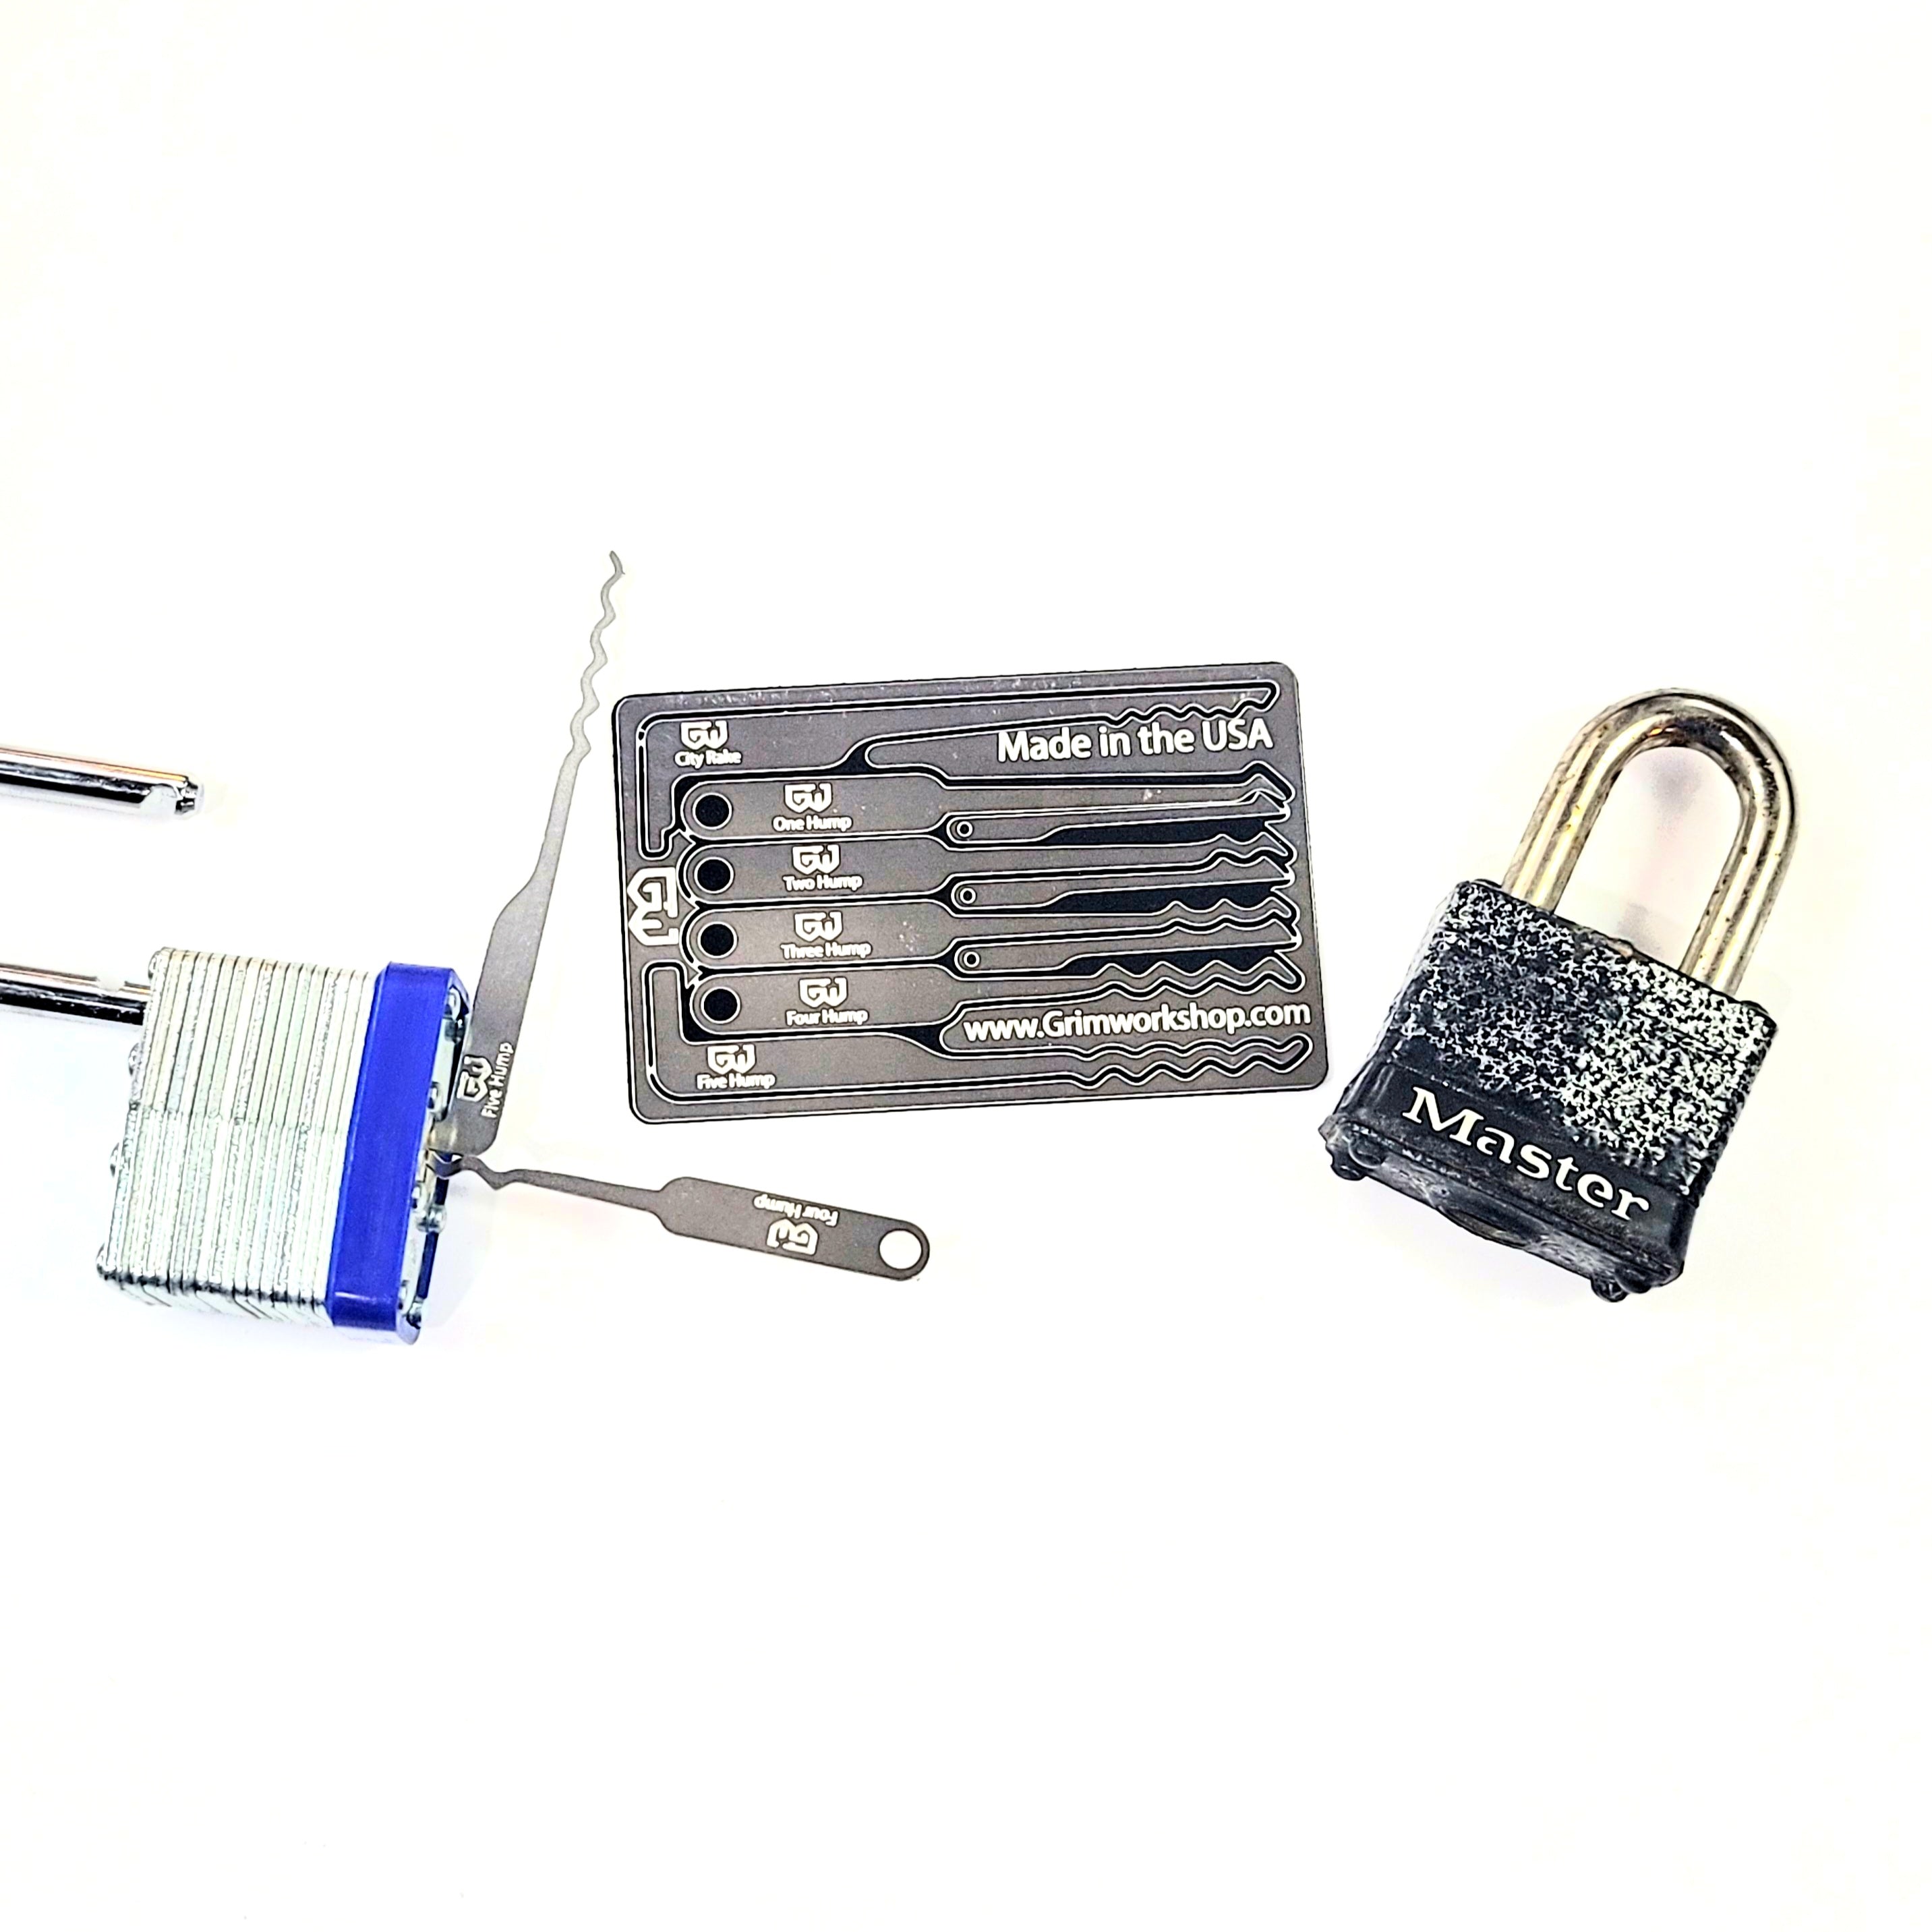 Lock Pick Rake Card with a full lock rake pick set including city rake lock pick, wave rake lock pick. Credit Card Lockpick Set